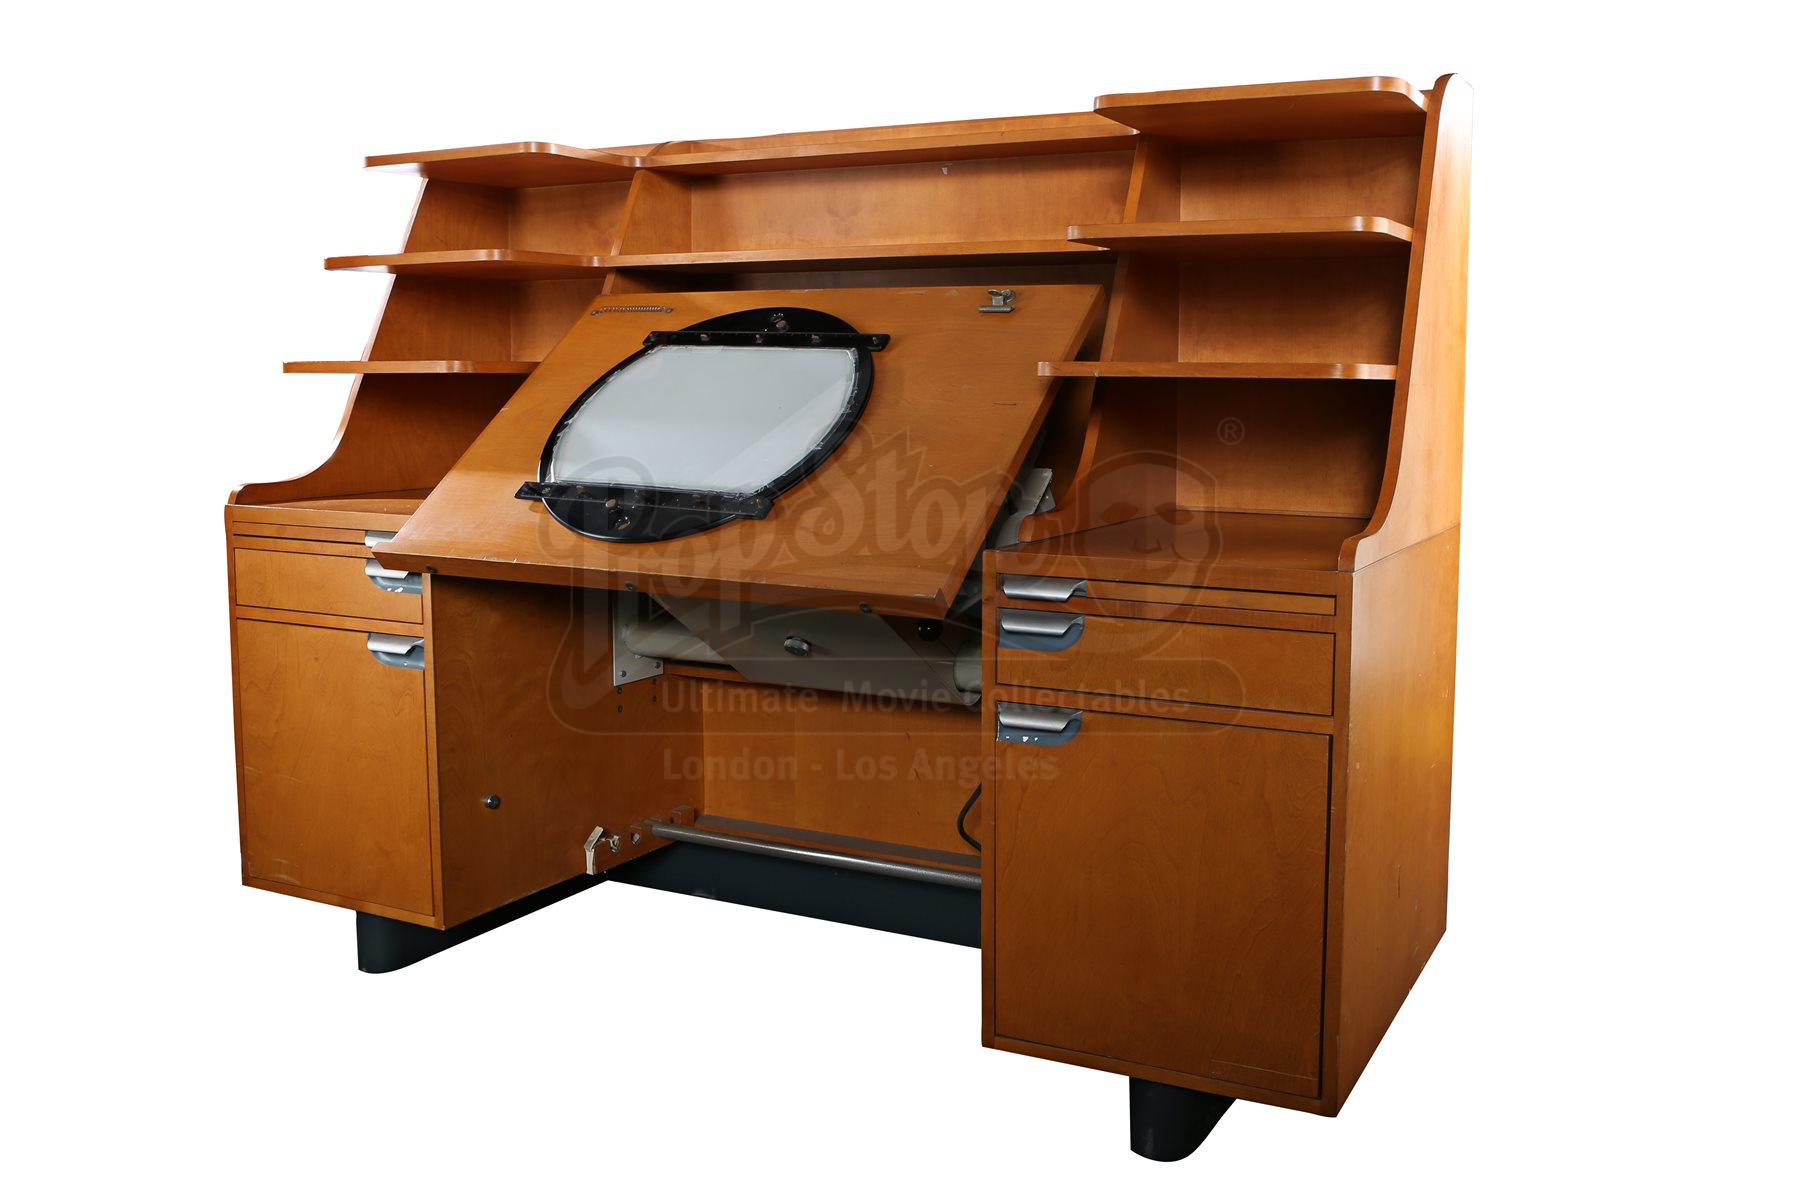 disney animation desk